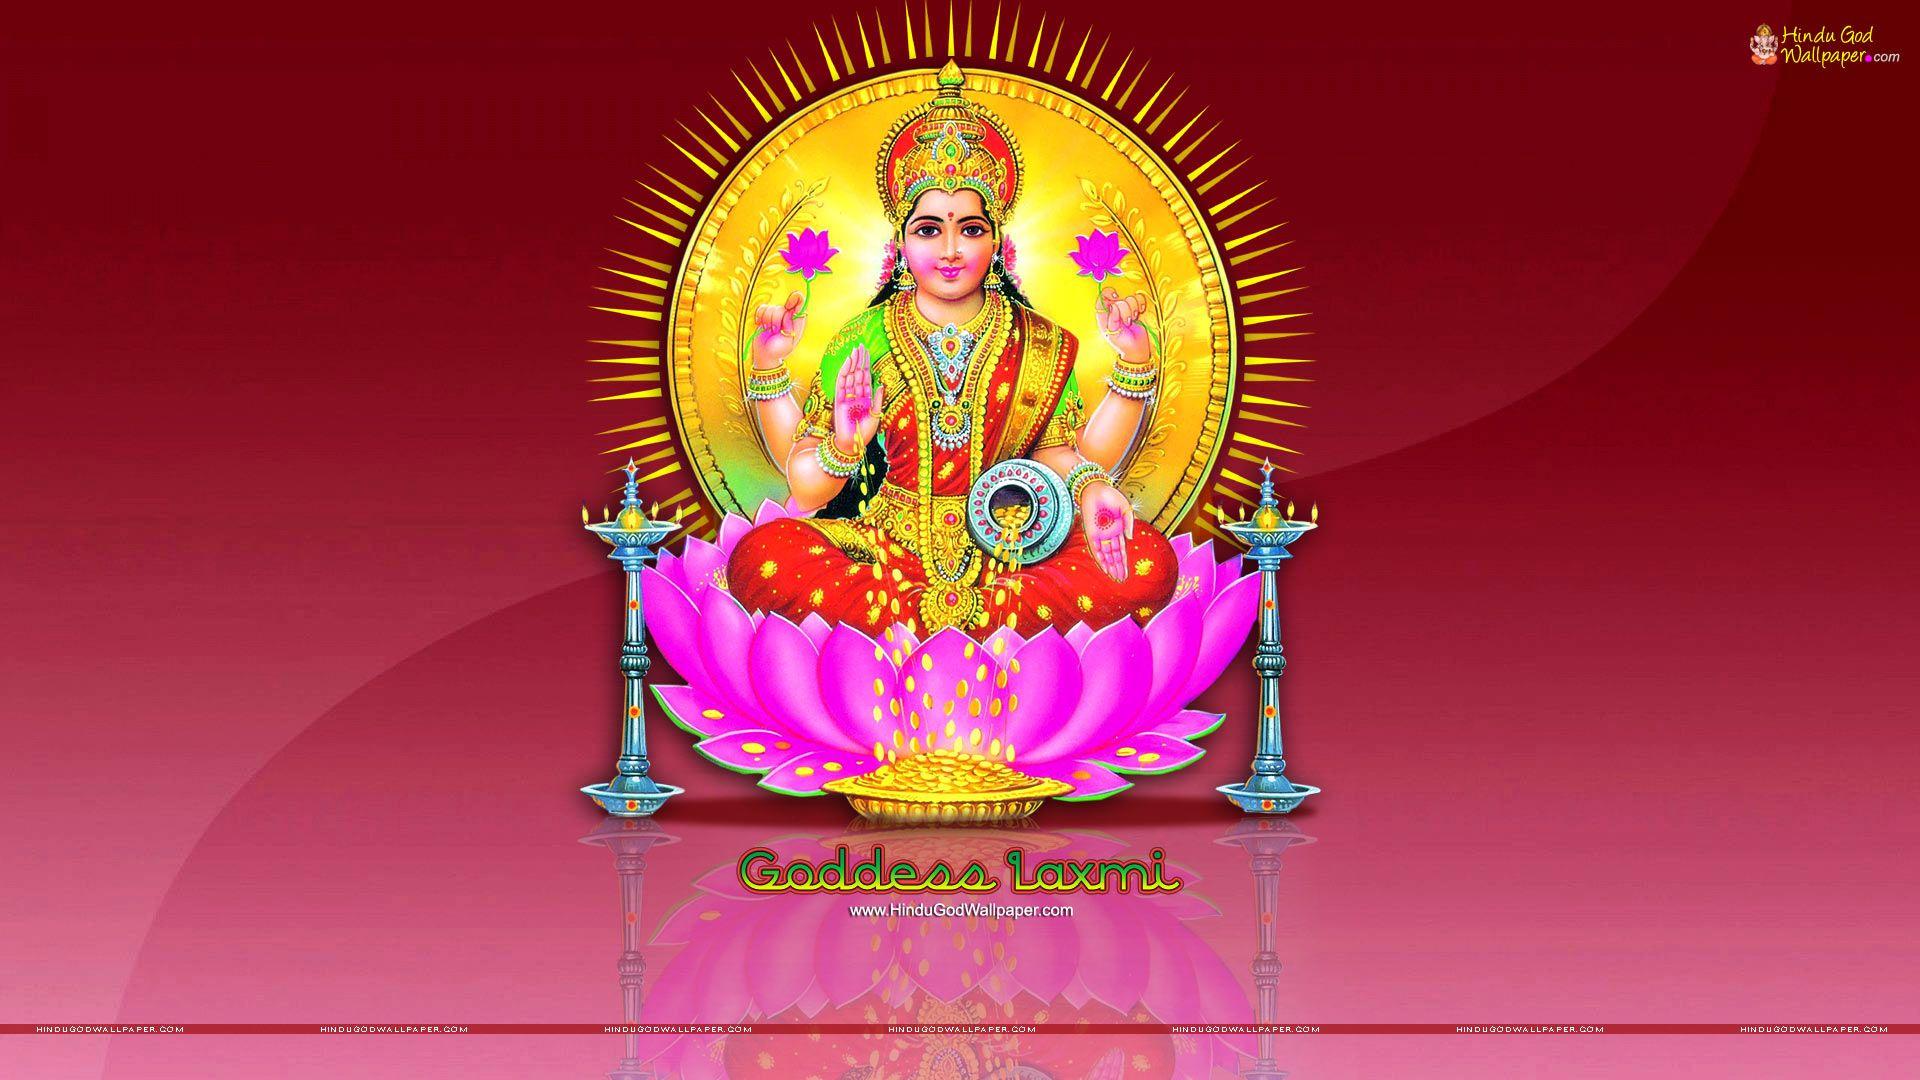 Goddess Laxmi HD Wallpaper Downloadp wallpaper, HD